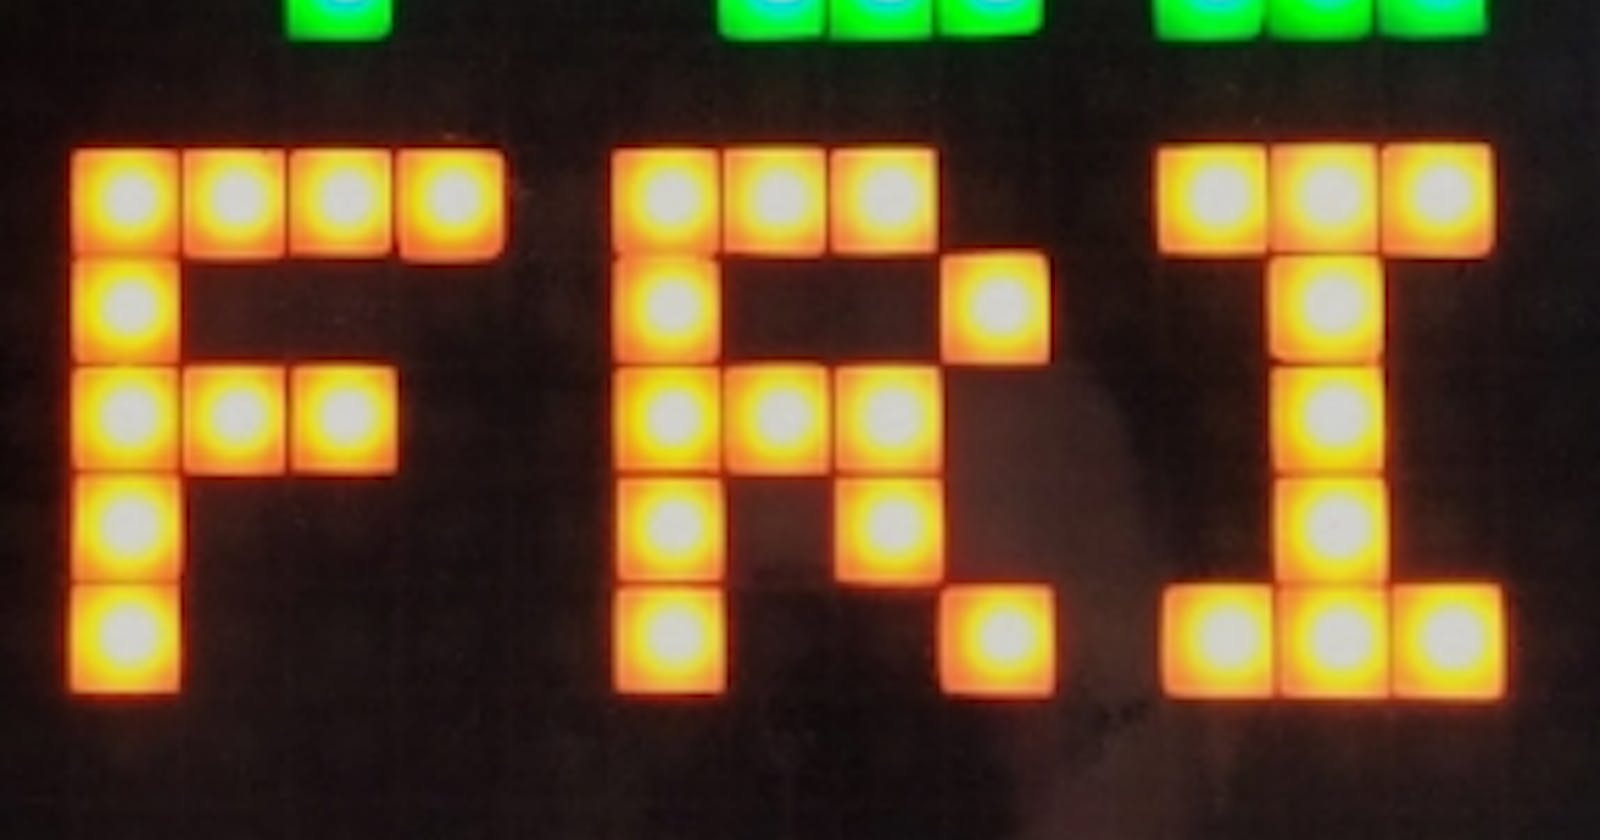 Programming LED displays on a Raspberry Pi